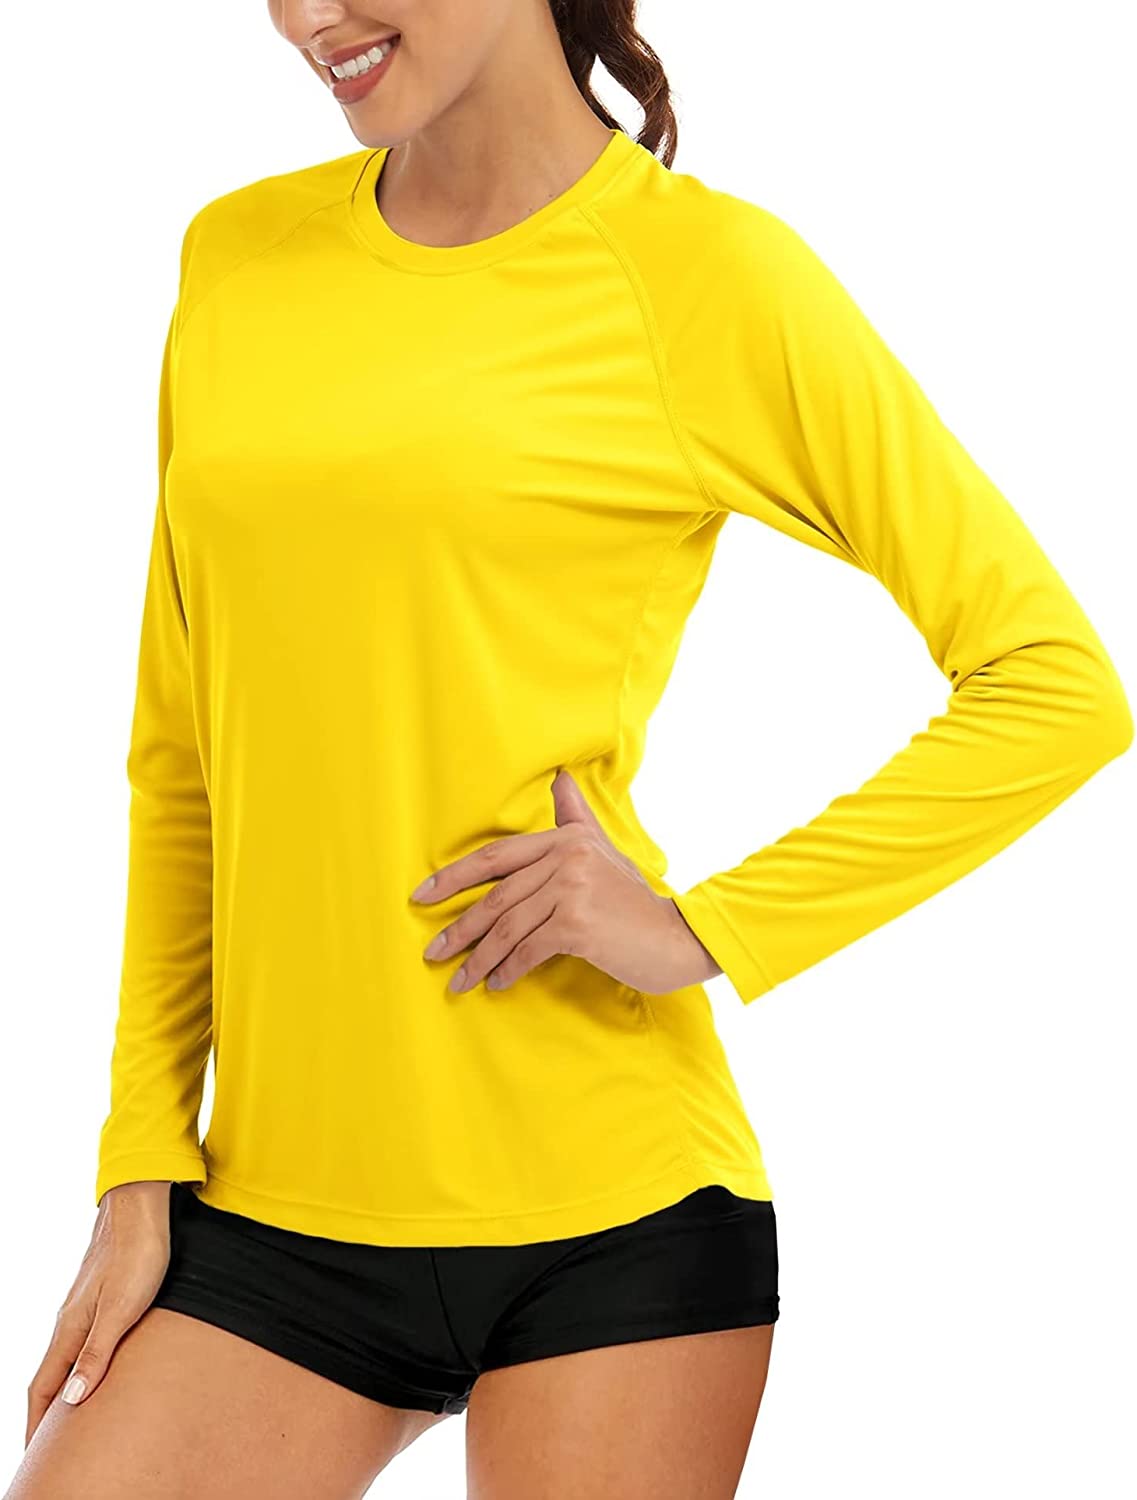 Women's Long Sleeve Shirts UPF 50+ Sun Protection Shirts for